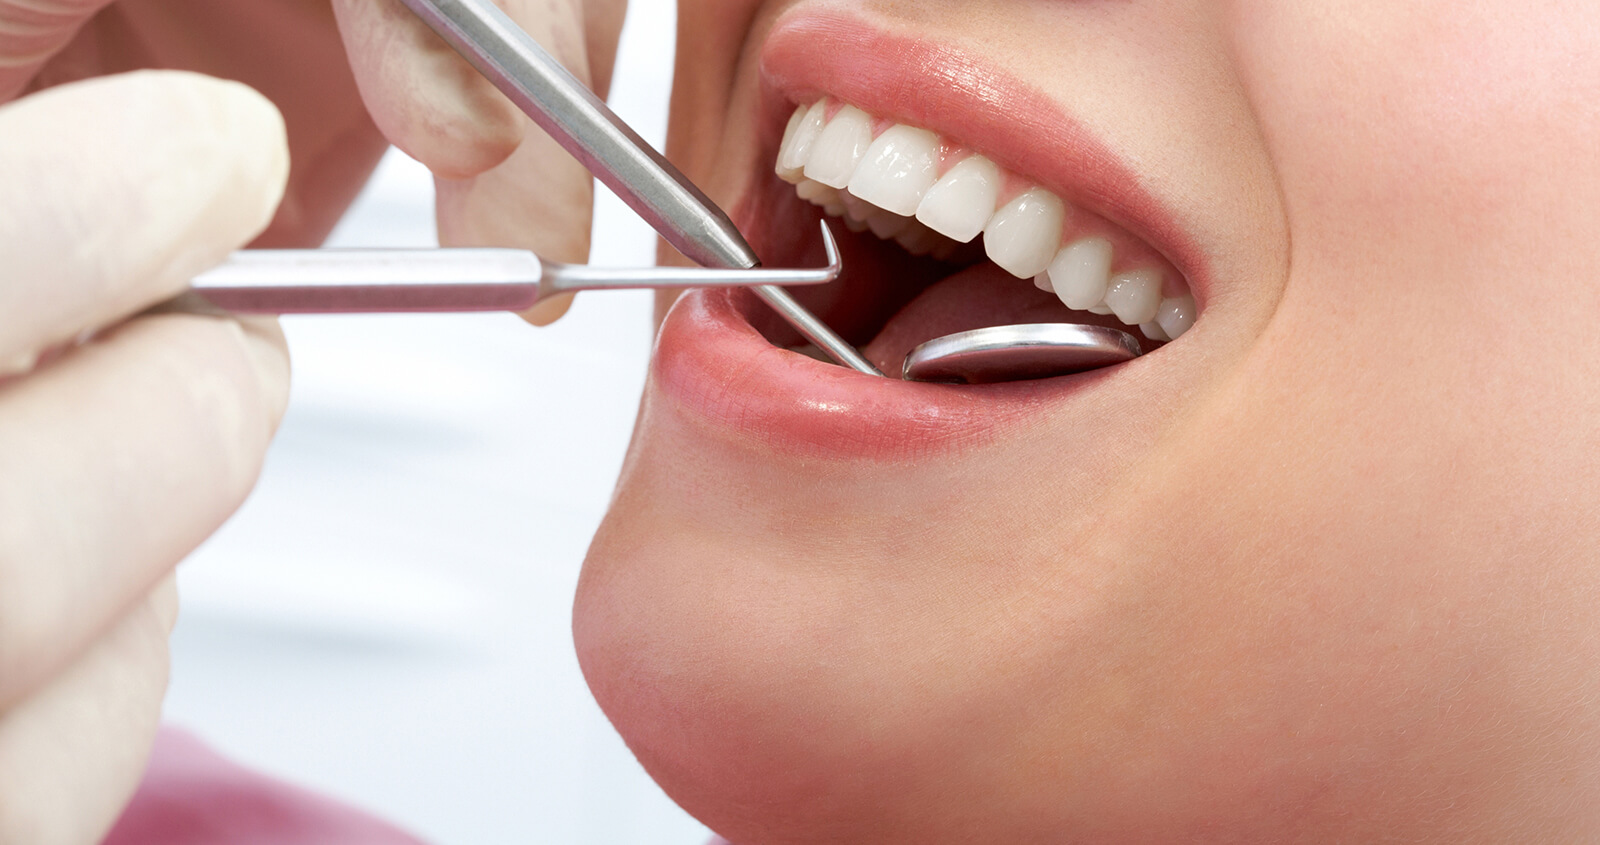 Overland Park, KS dentist explains the mercury removal process for amalgam fillings